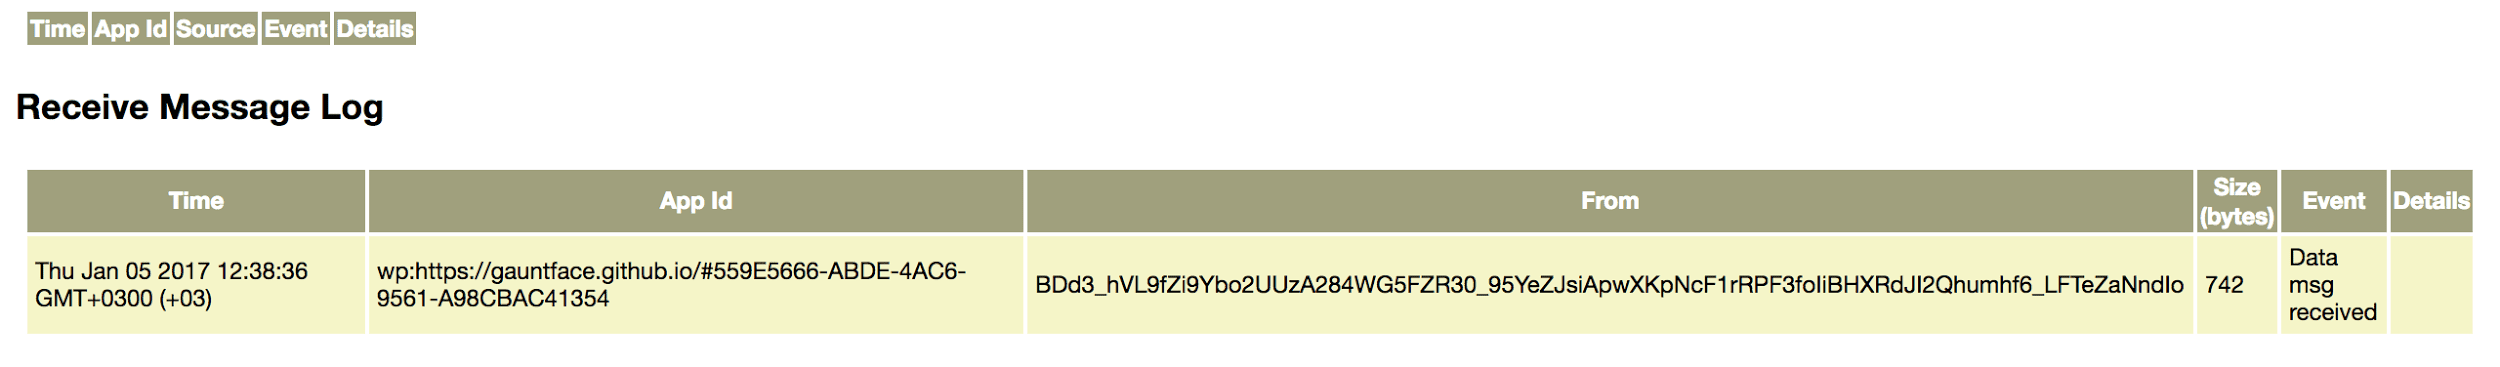 GCM internals receive message log.